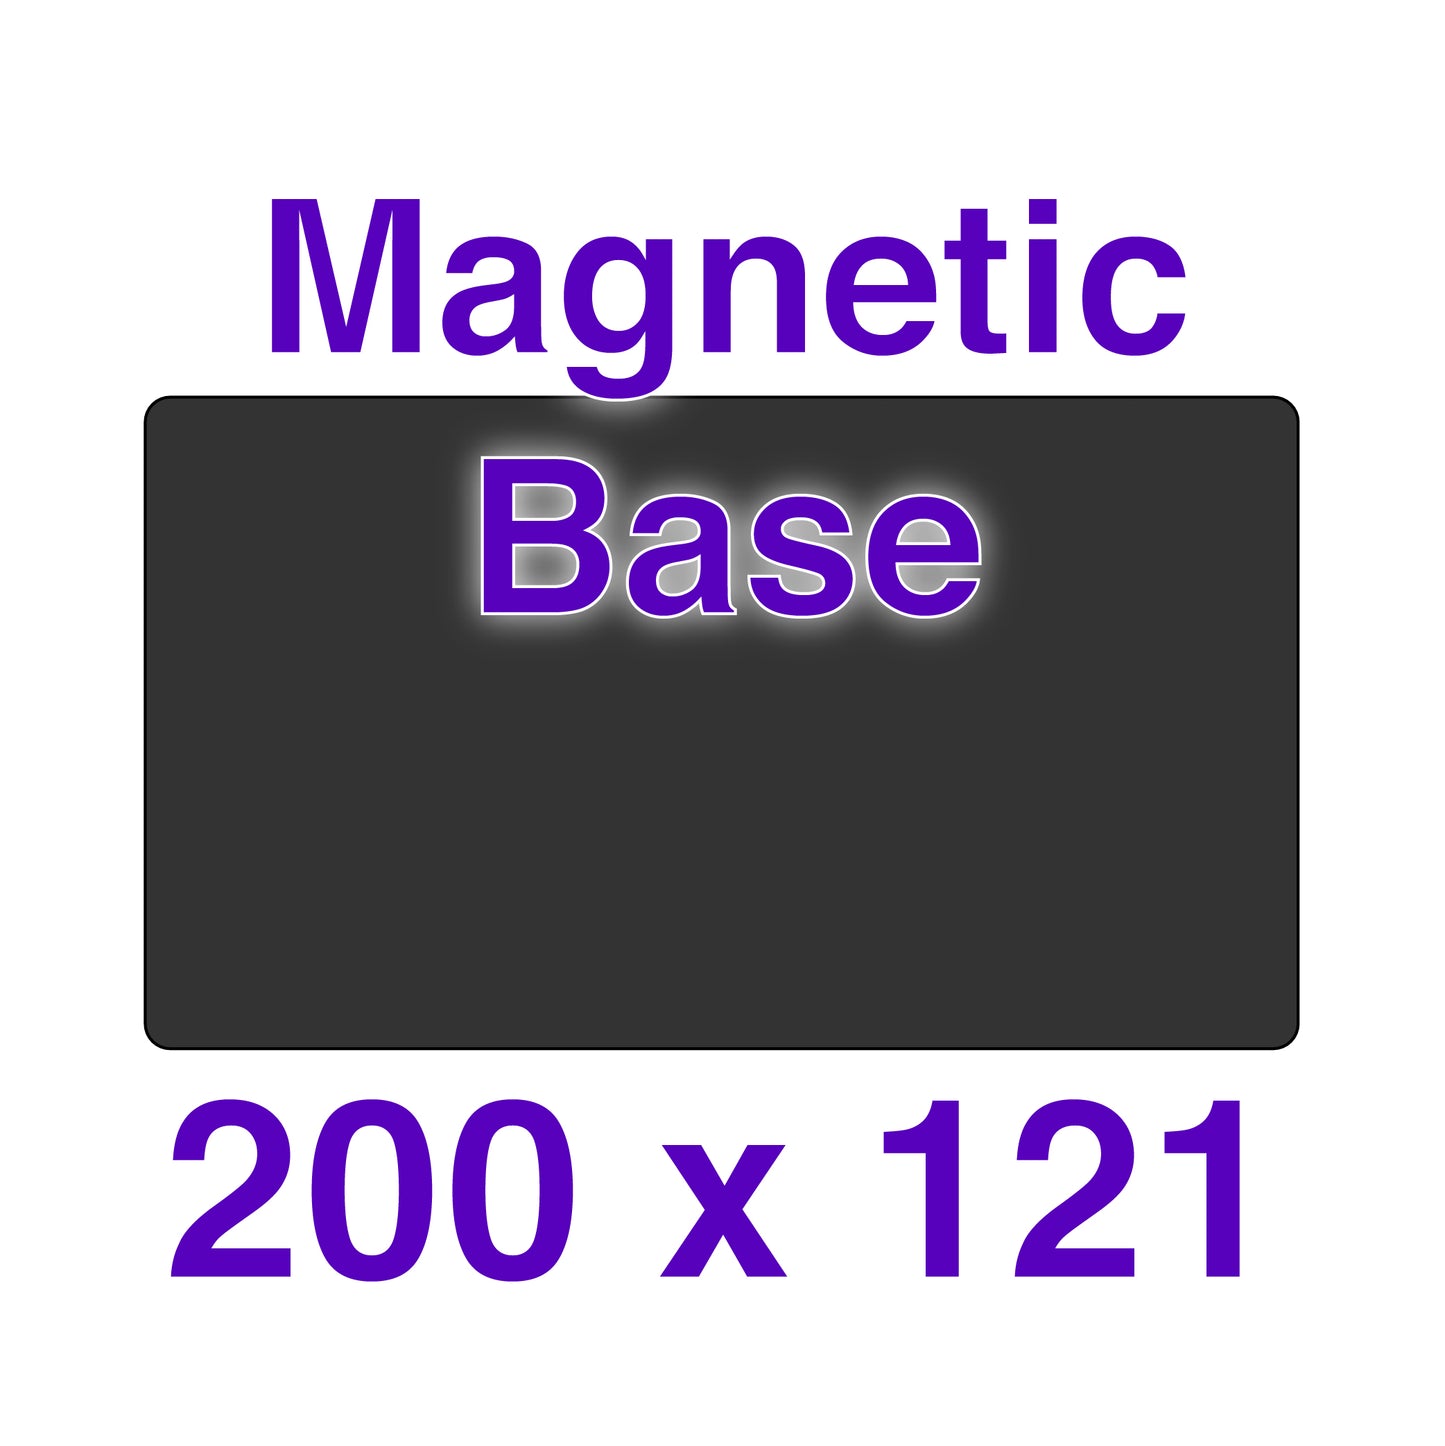 Magnetic Base - 200 x 121